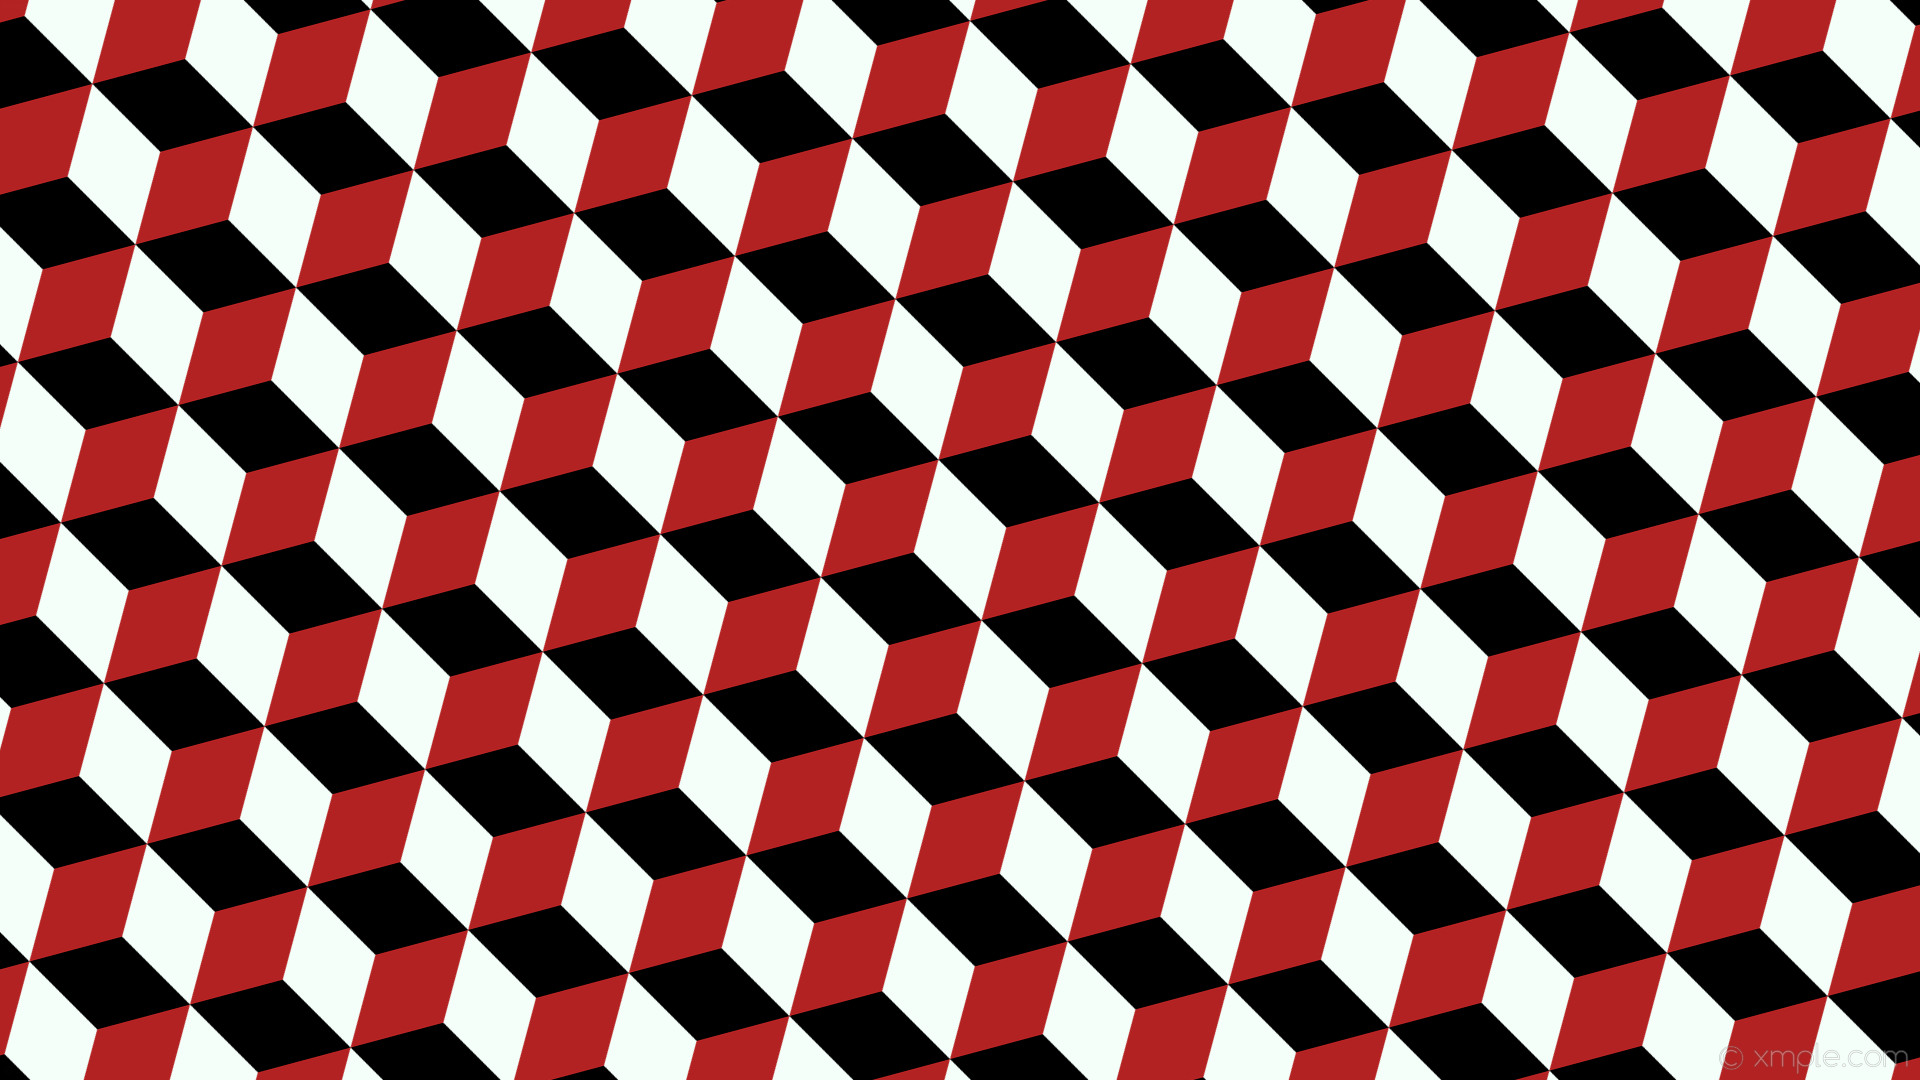 1920x1080 wallpaper black white 3d cubes red mint cream fire brick #f5fffa #b22222  #000000